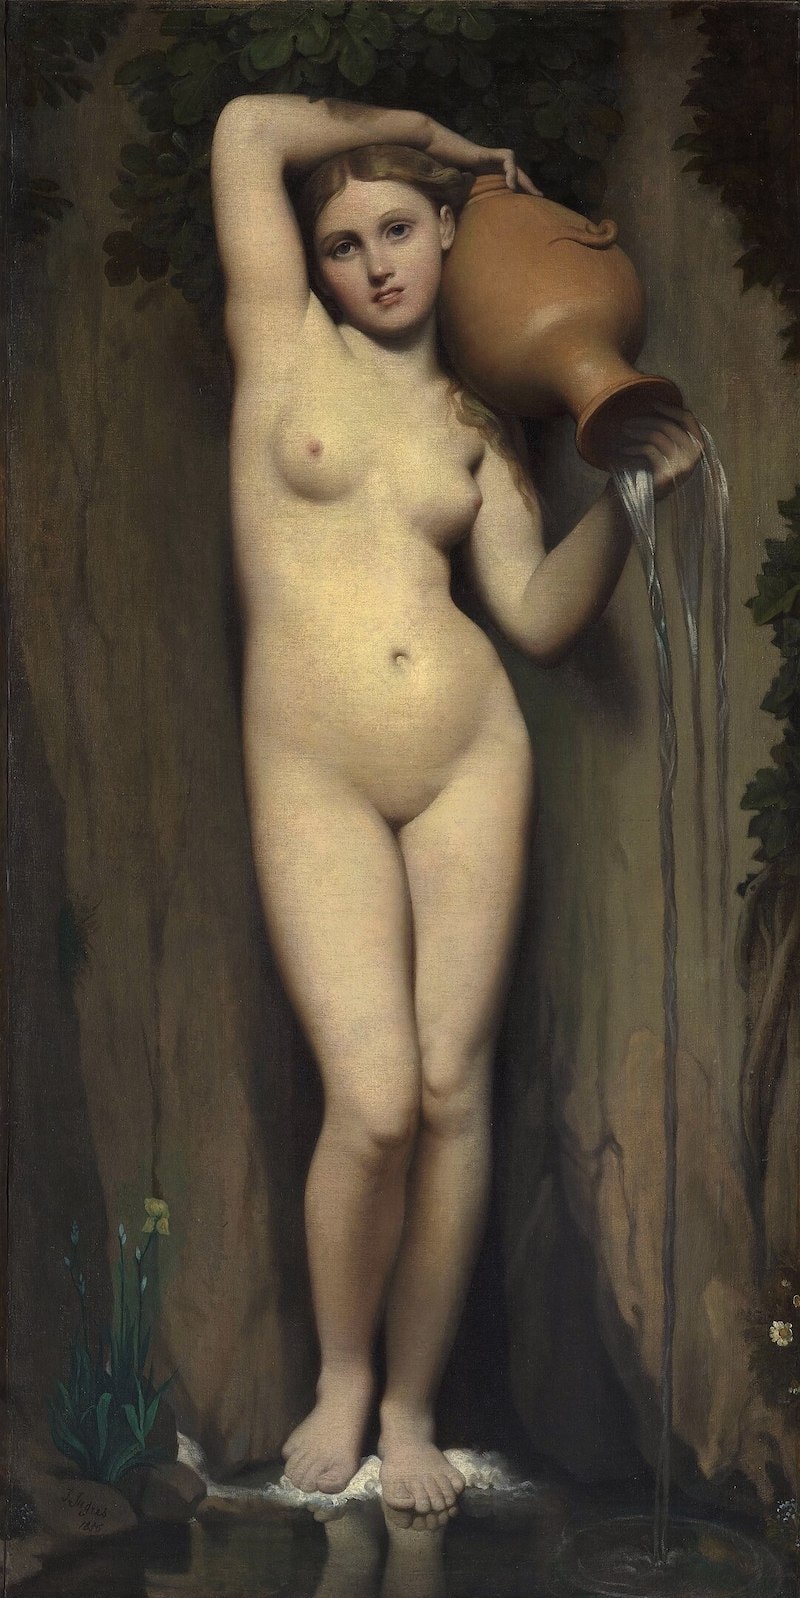 Jean-Auguste-Dominique Ingres, Die Quelle, 1820 - 1856